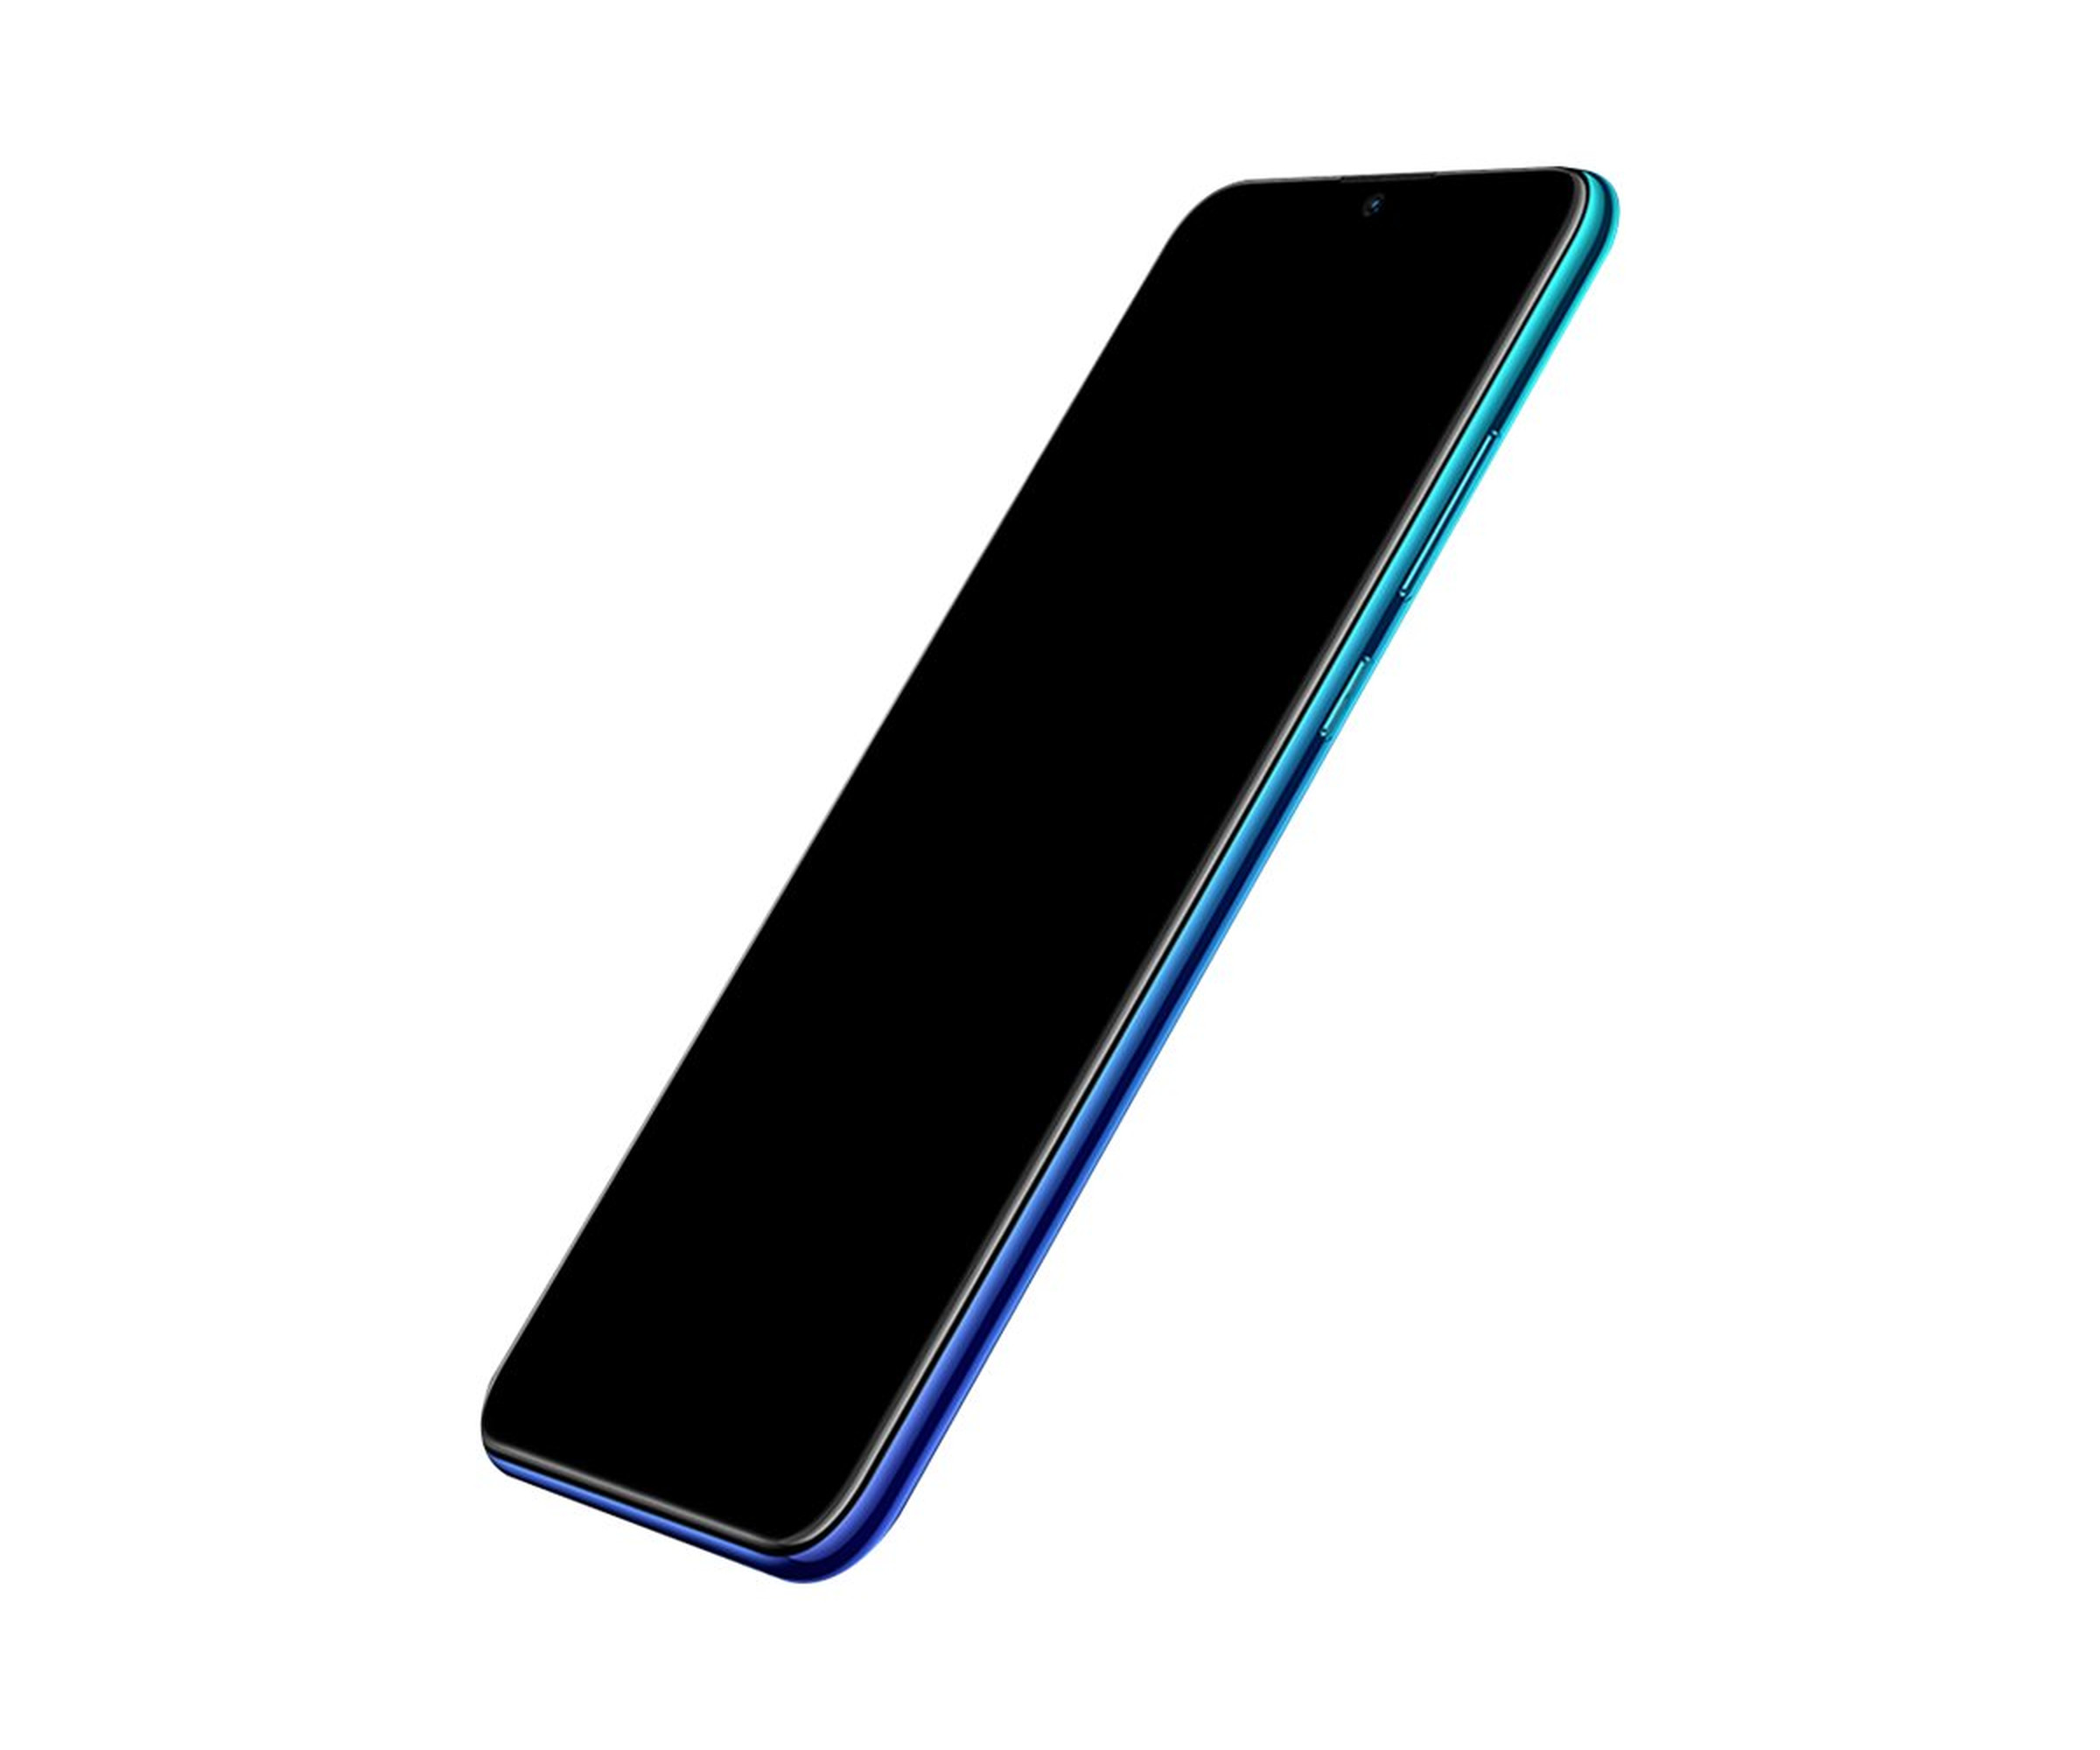 Huawei P smart 2019 Dual-SIM sapphire blue - Smartphone - 64 GB